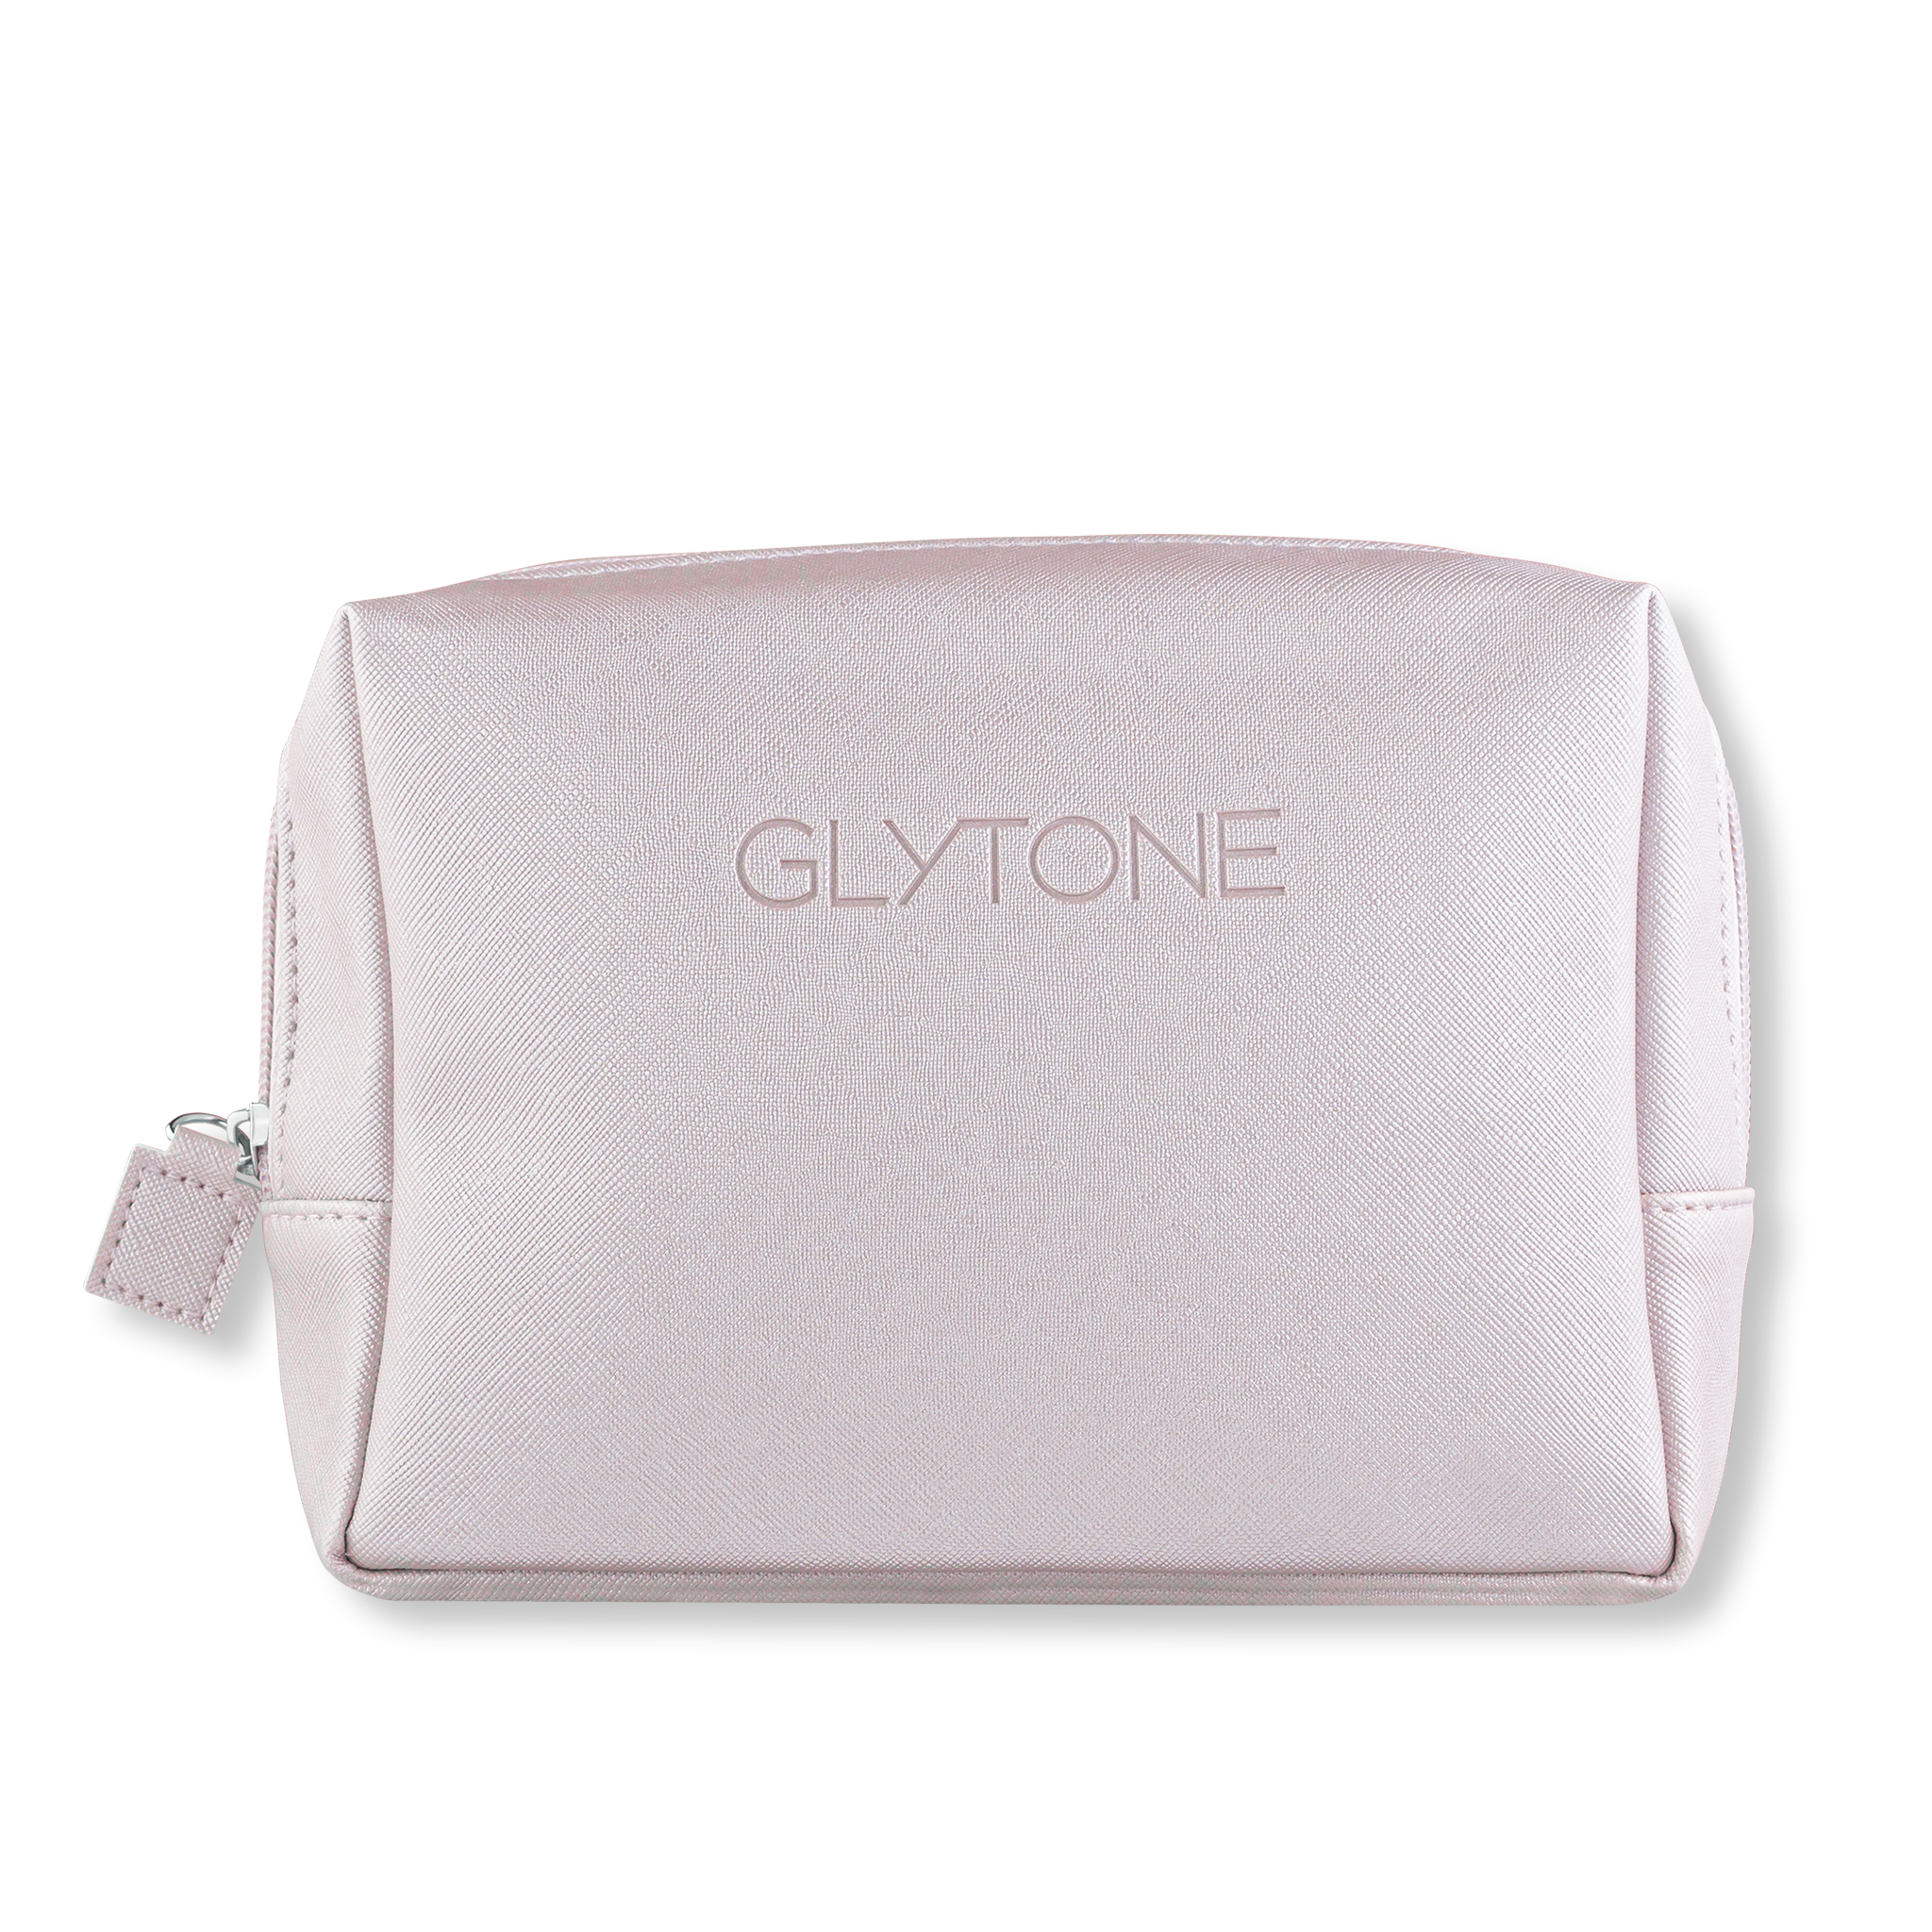 Glytone Cosmetics Pouch